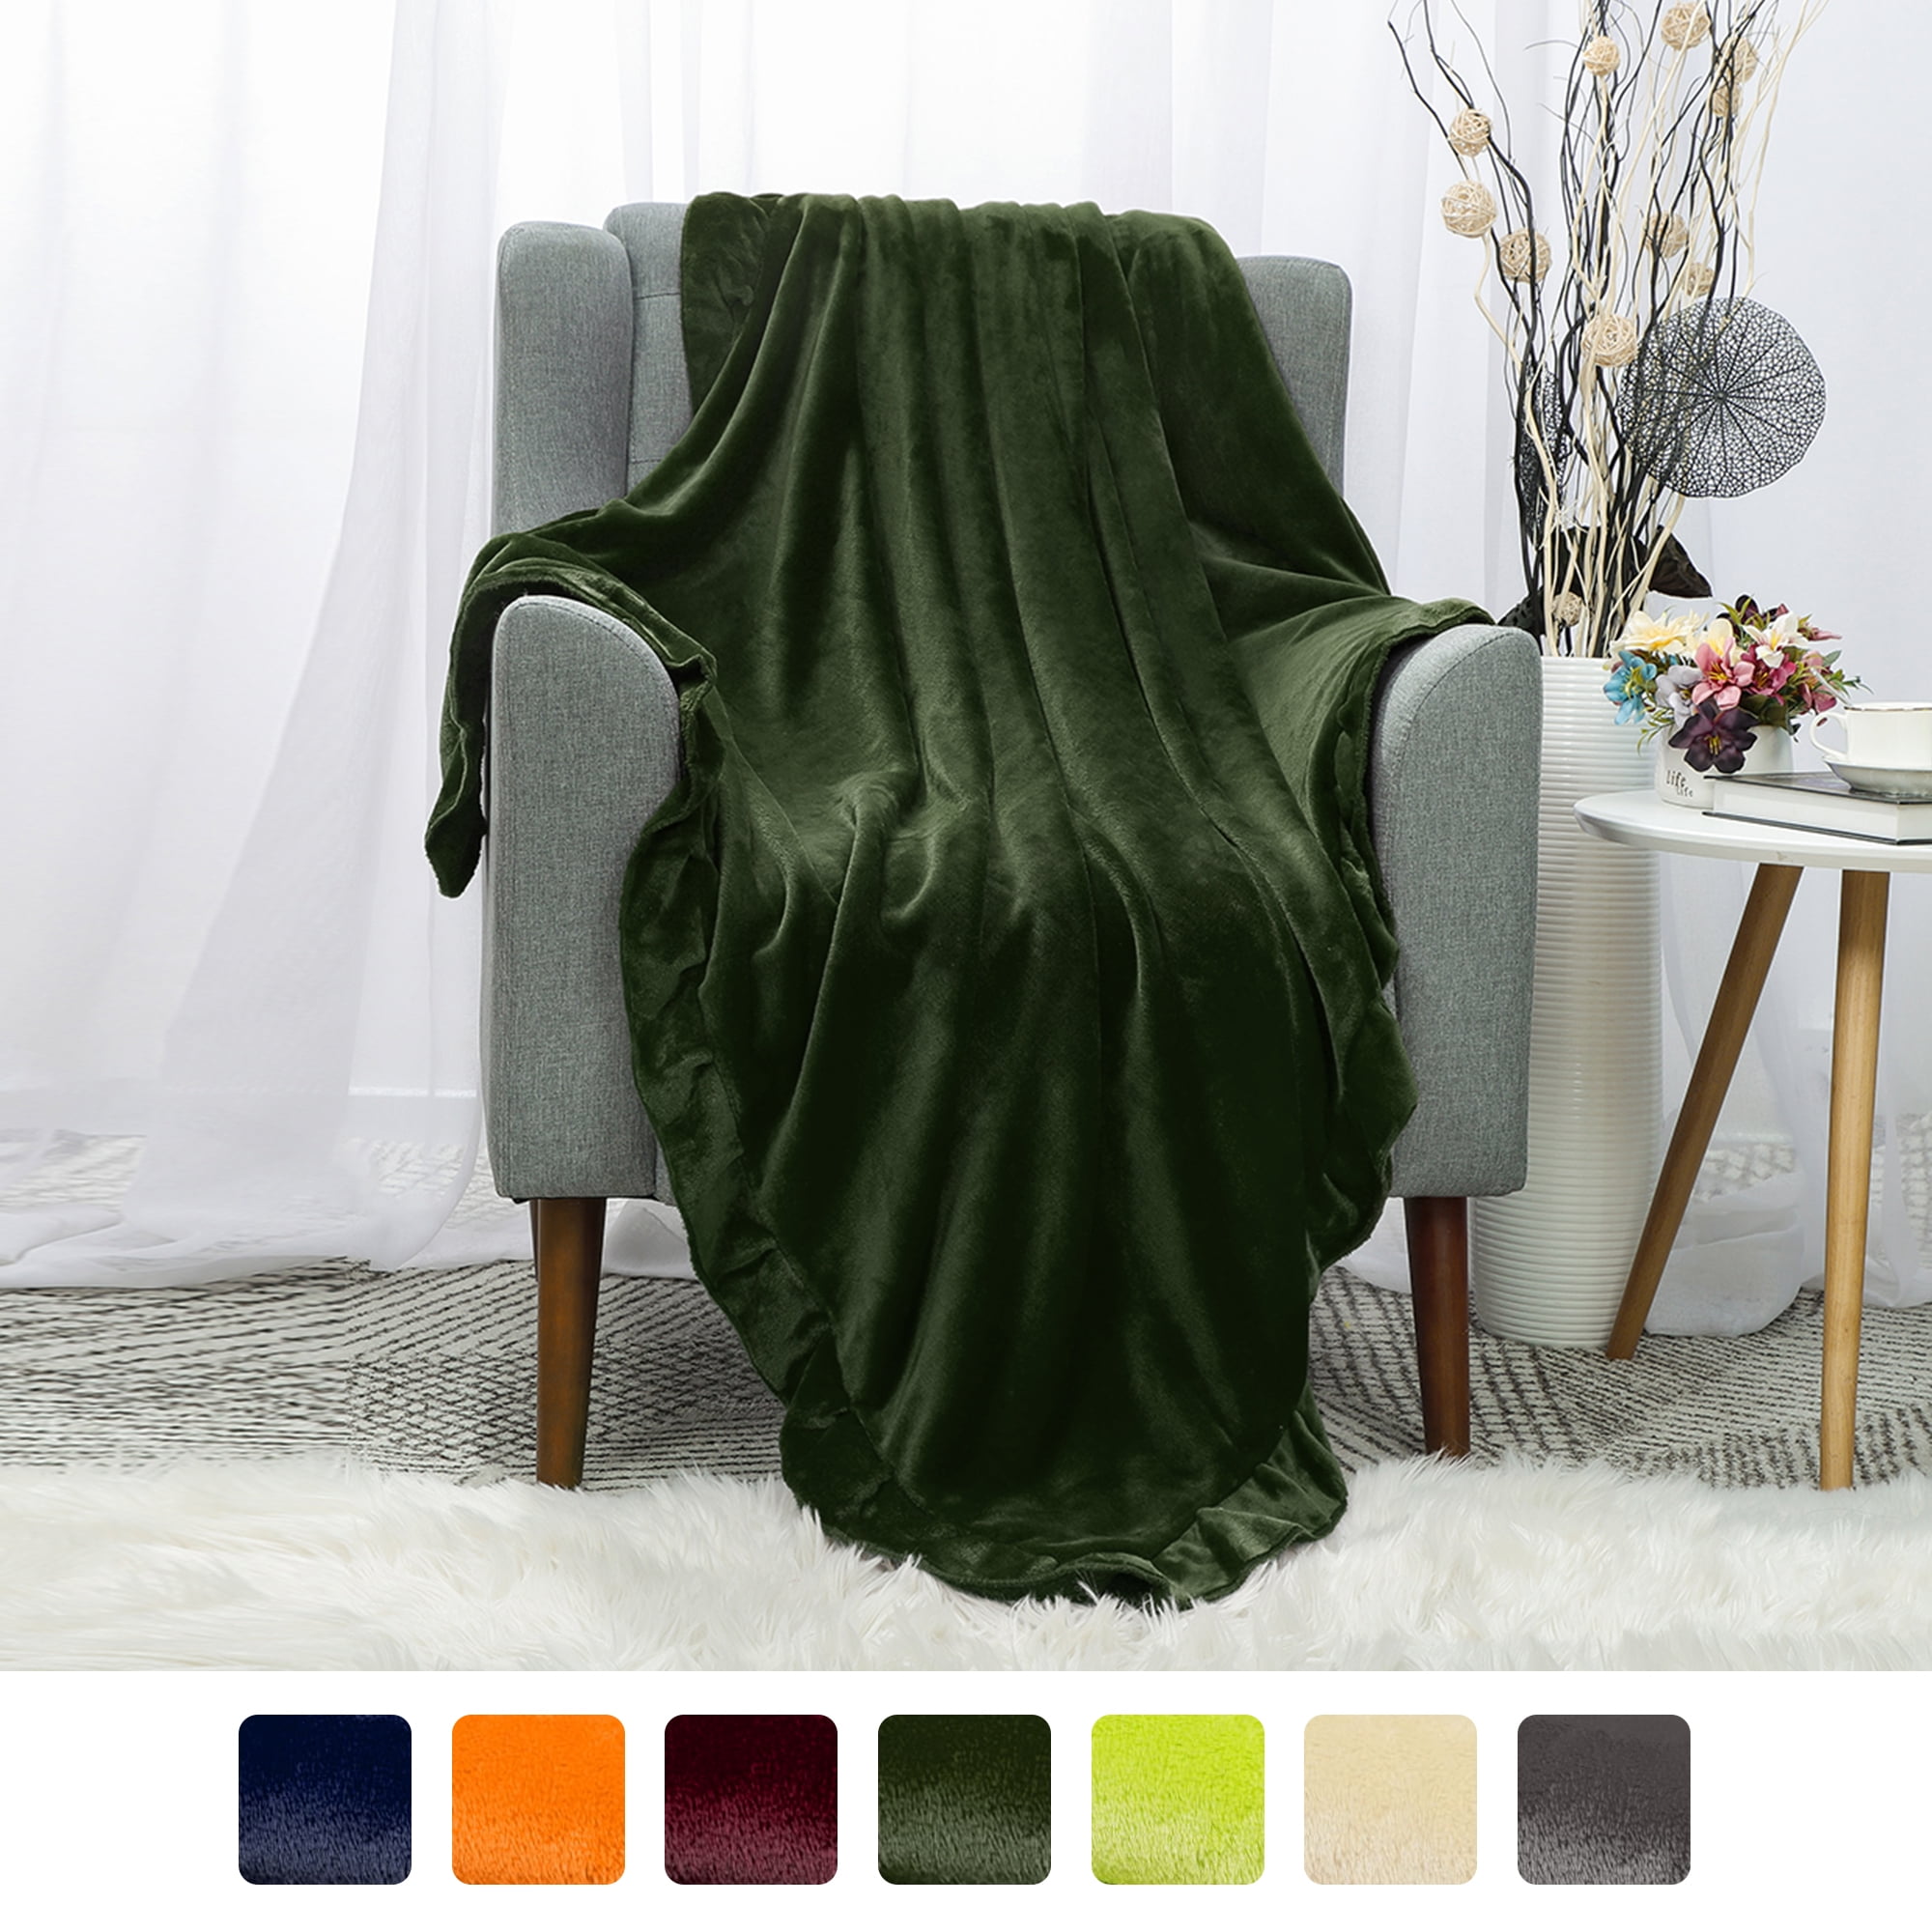 Details about   Bedsure Luxury Flannel Fleece Blanket Plush Blankets Throw Microfiber Bed Sofa 